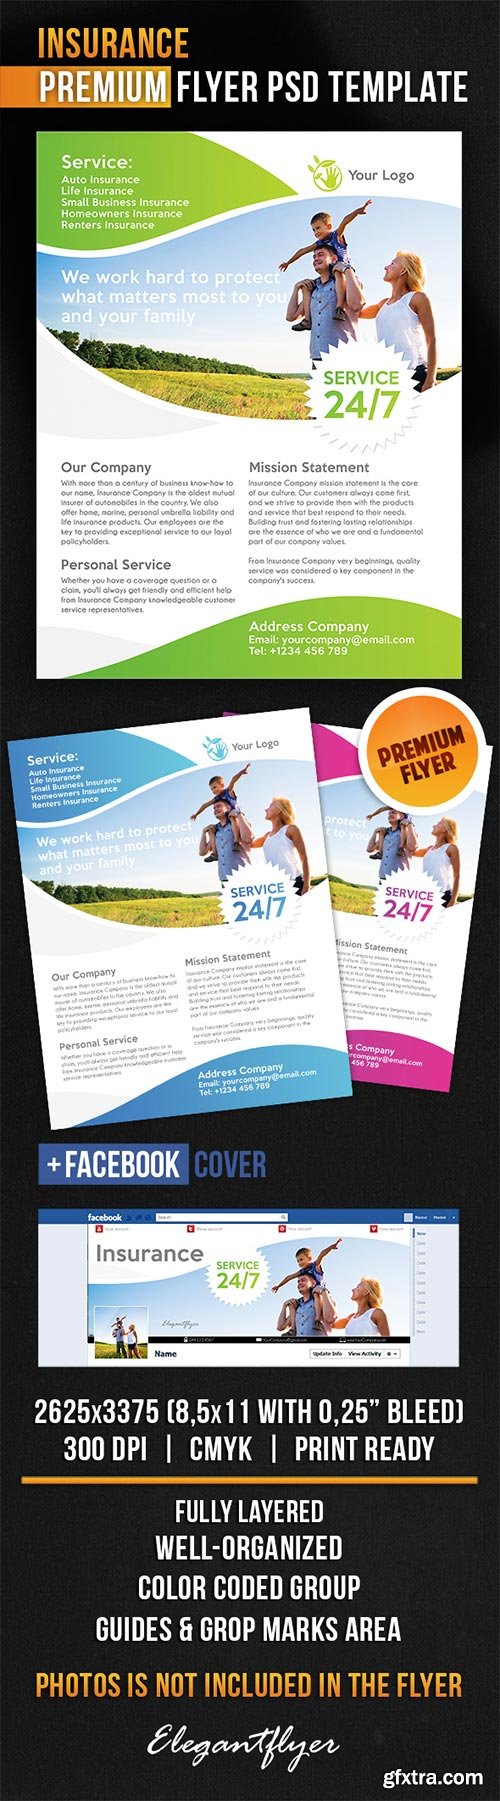 Insurance Flyer PSD Template + Facebook Cover